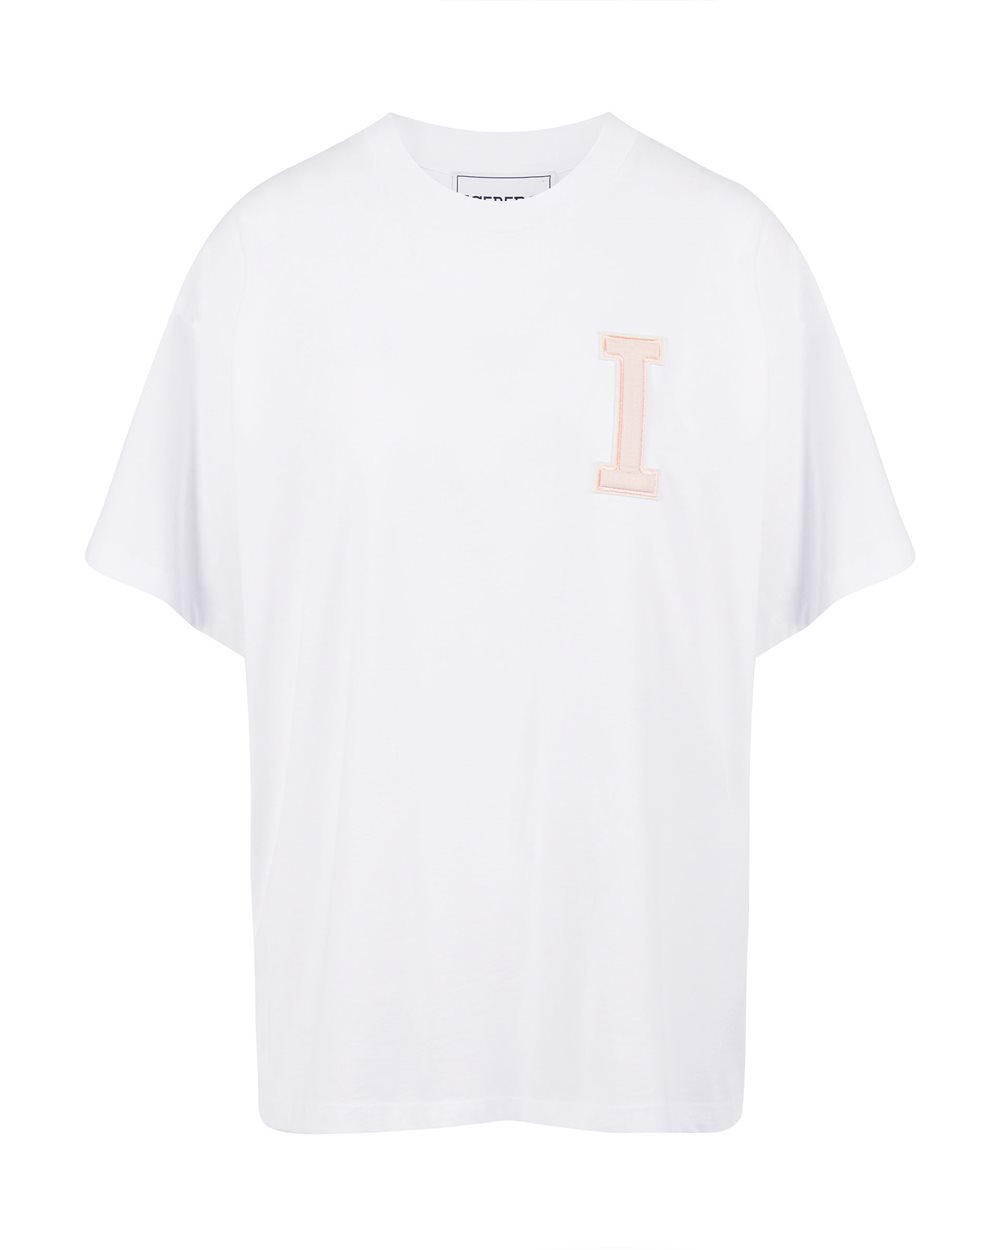 White T-shirt with logo | Iceberg - Official Website